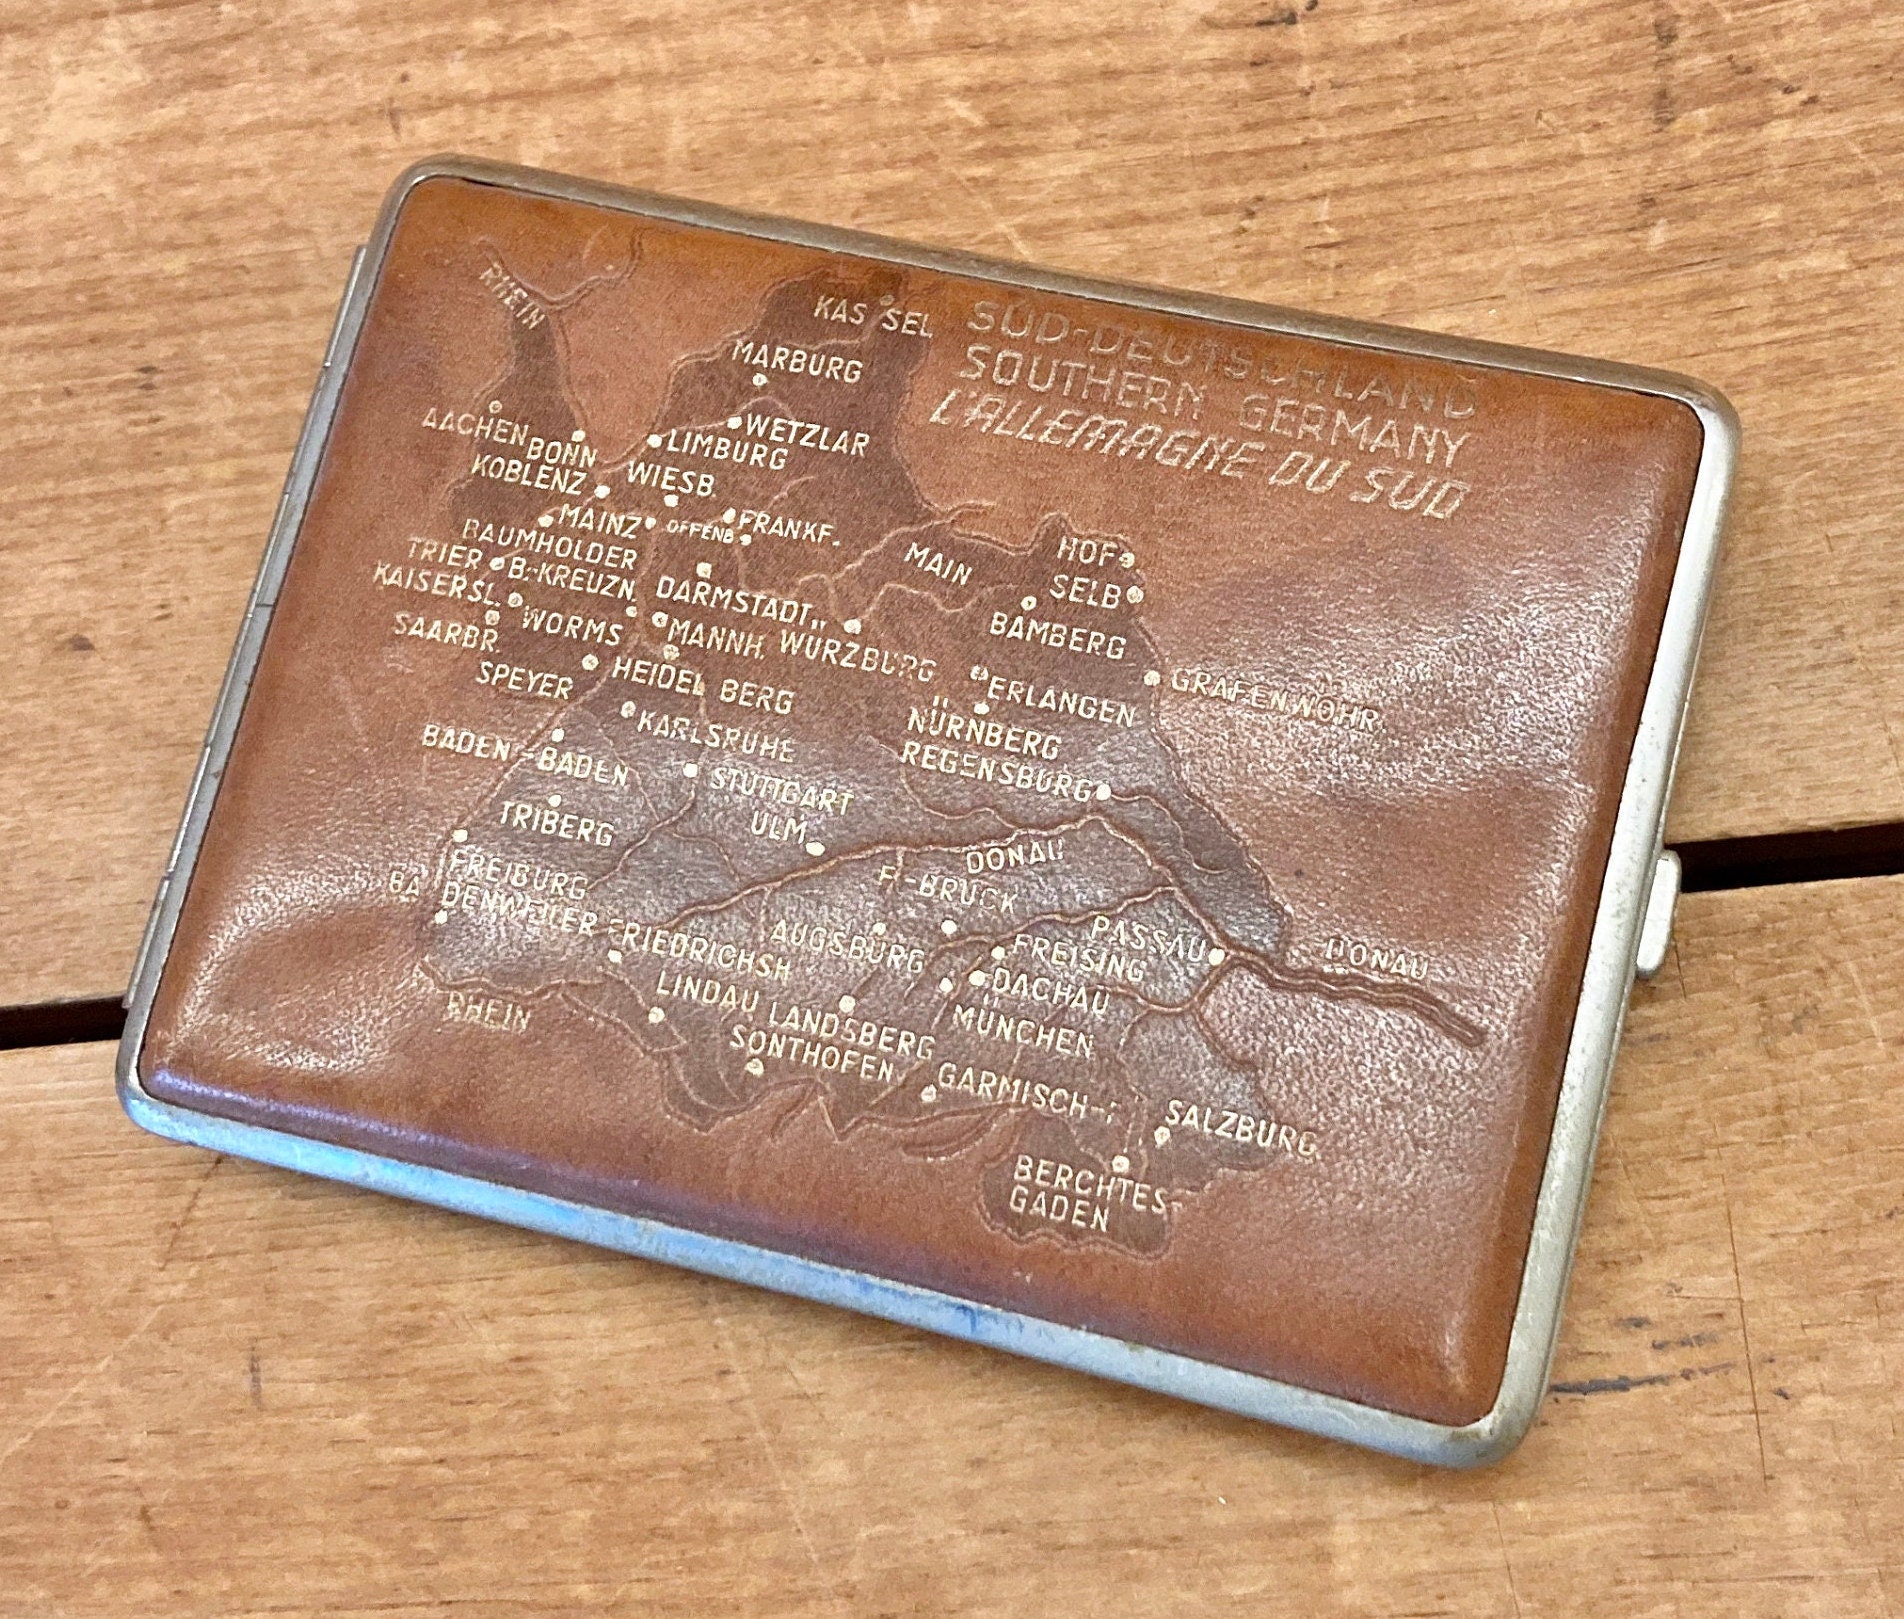 Handmade Antique Silver Embossed Angel Cigarette Case – Urban Metal Designs